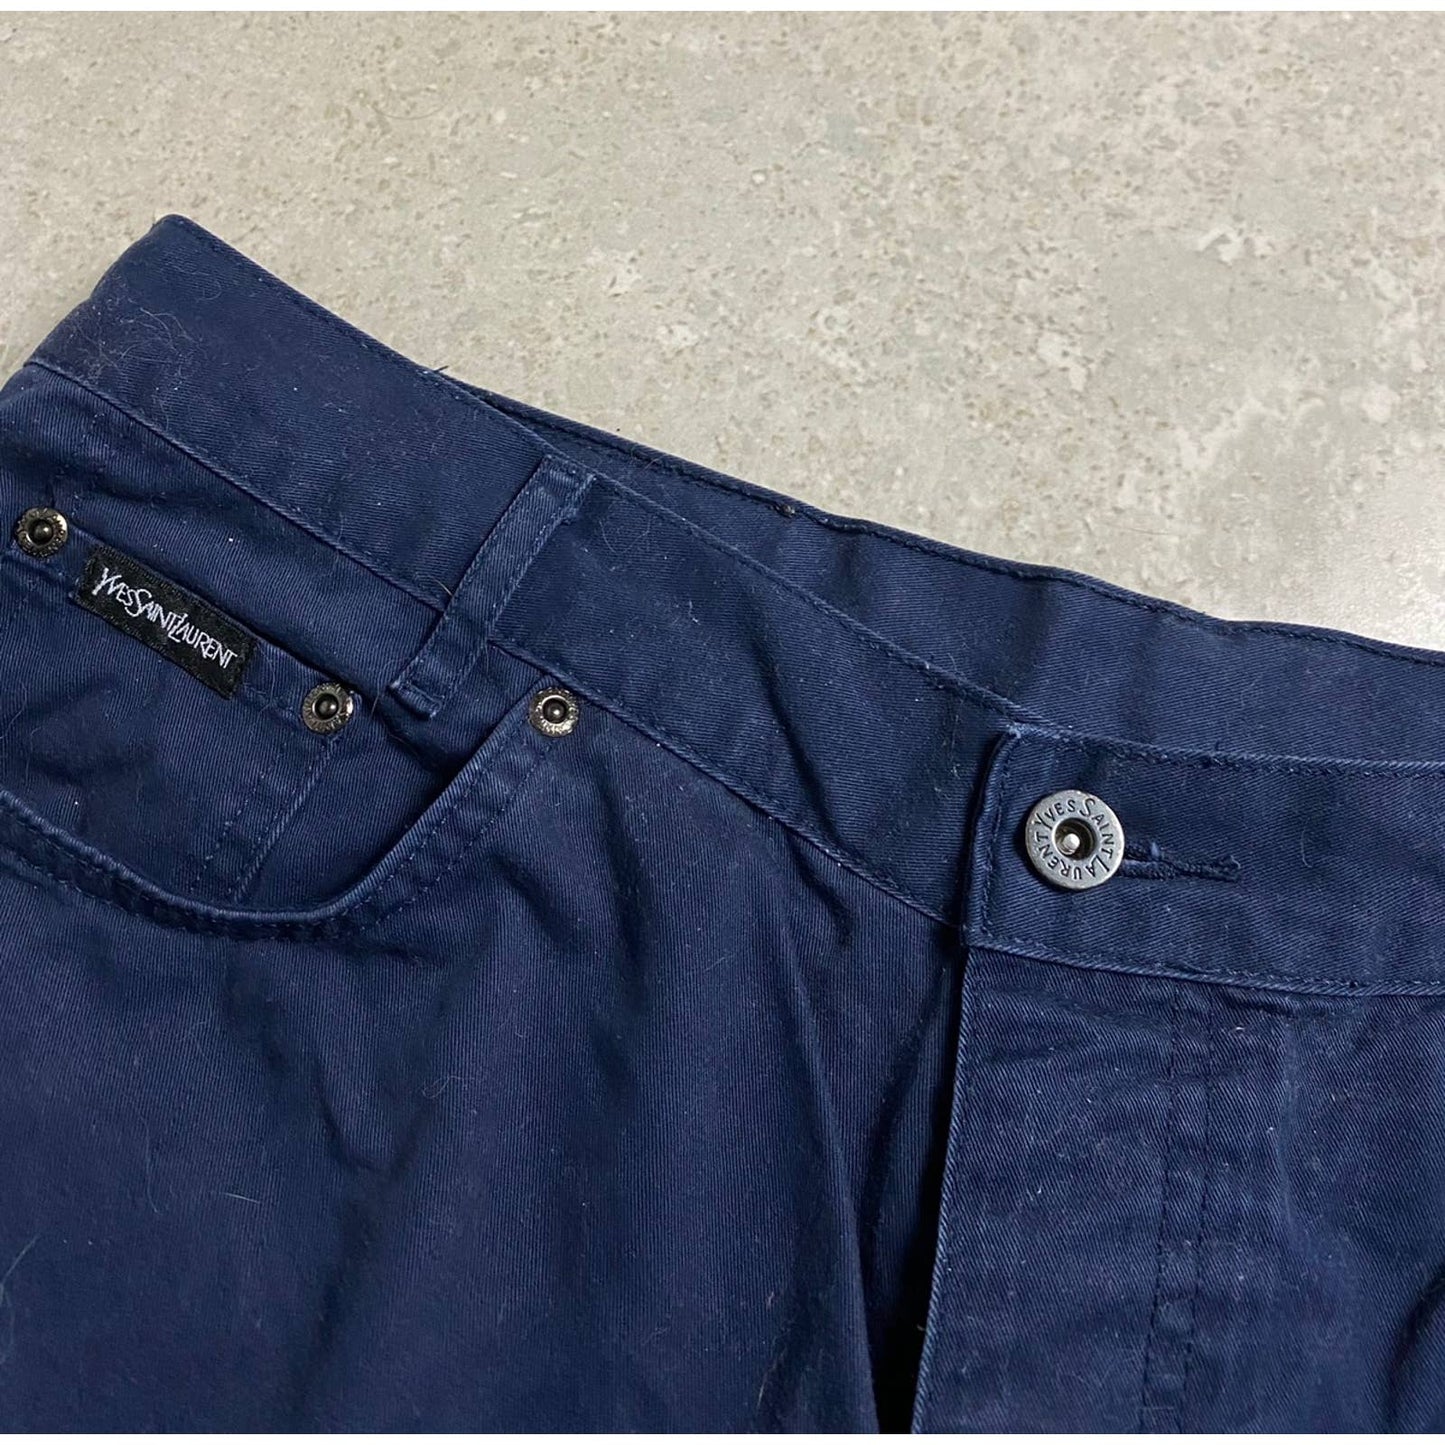 Yves Saint Laurent vintage chino pants YSL jeans navy